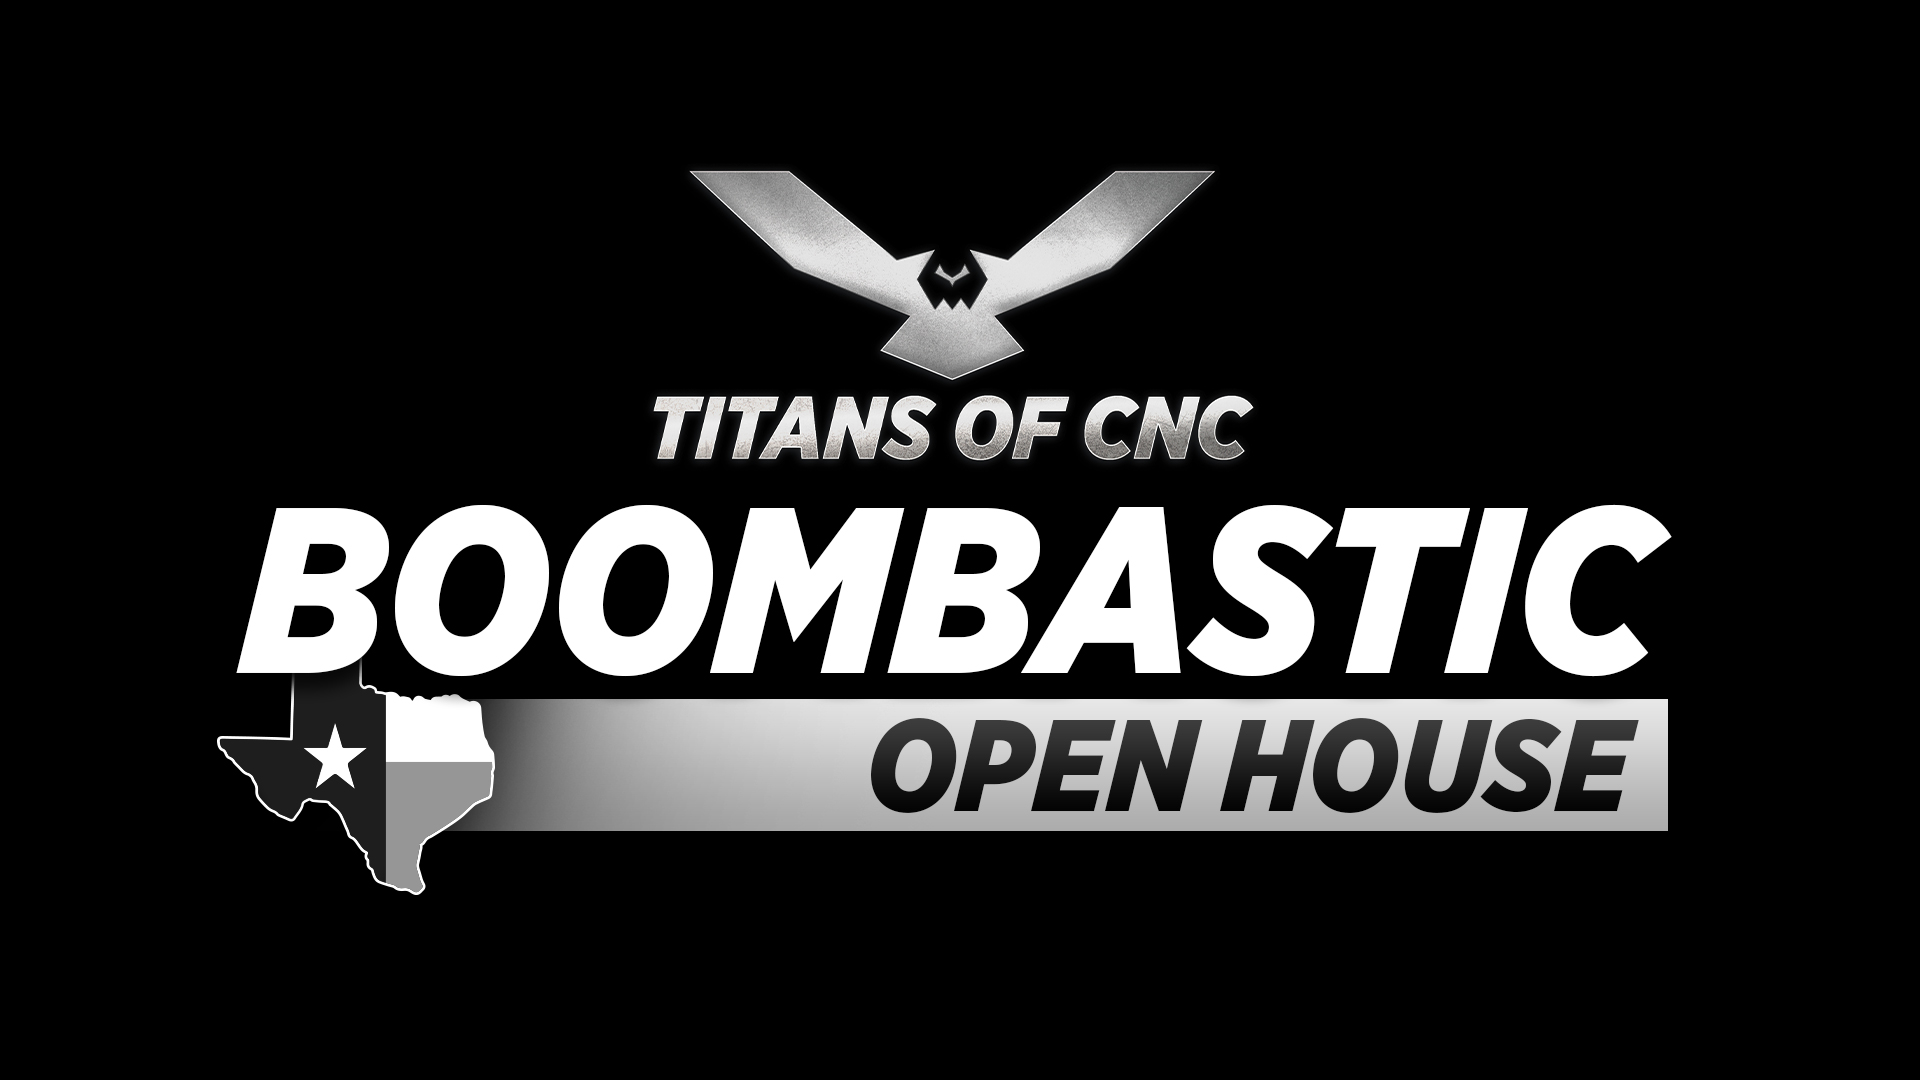  Boombastic Open House - Titans of CNC